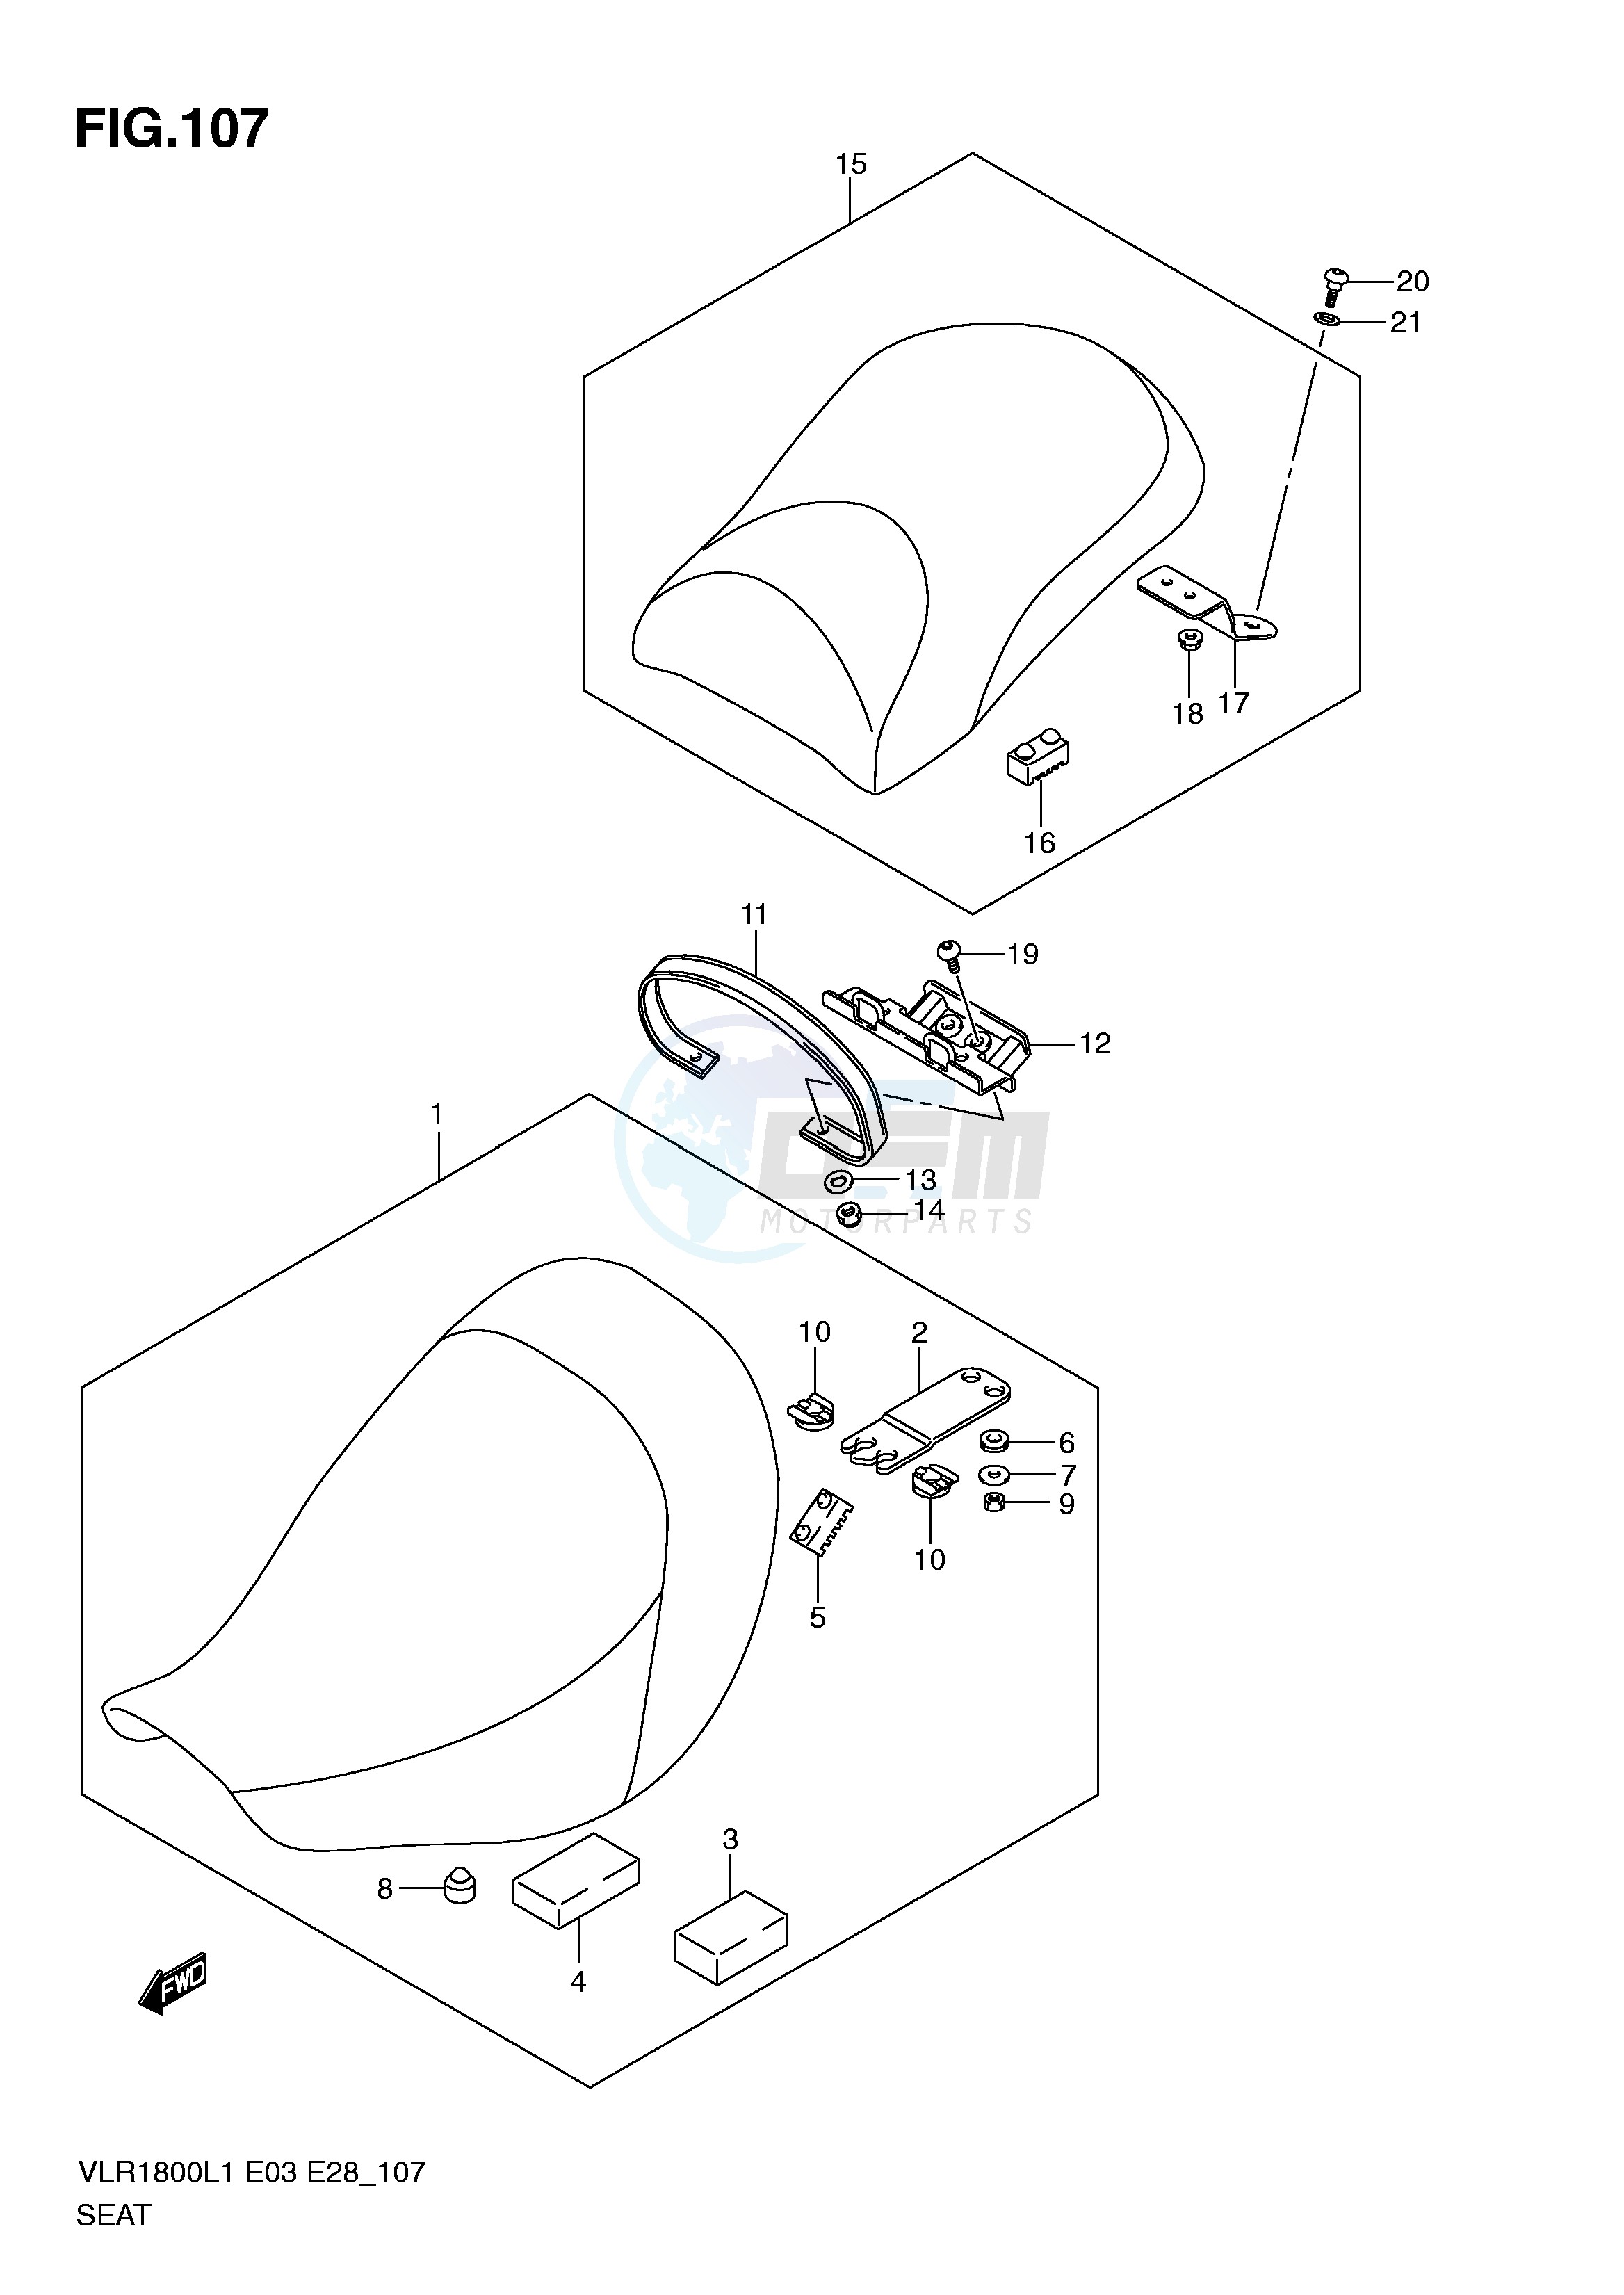 SEAT (VLR1800L1 E33) blueprint